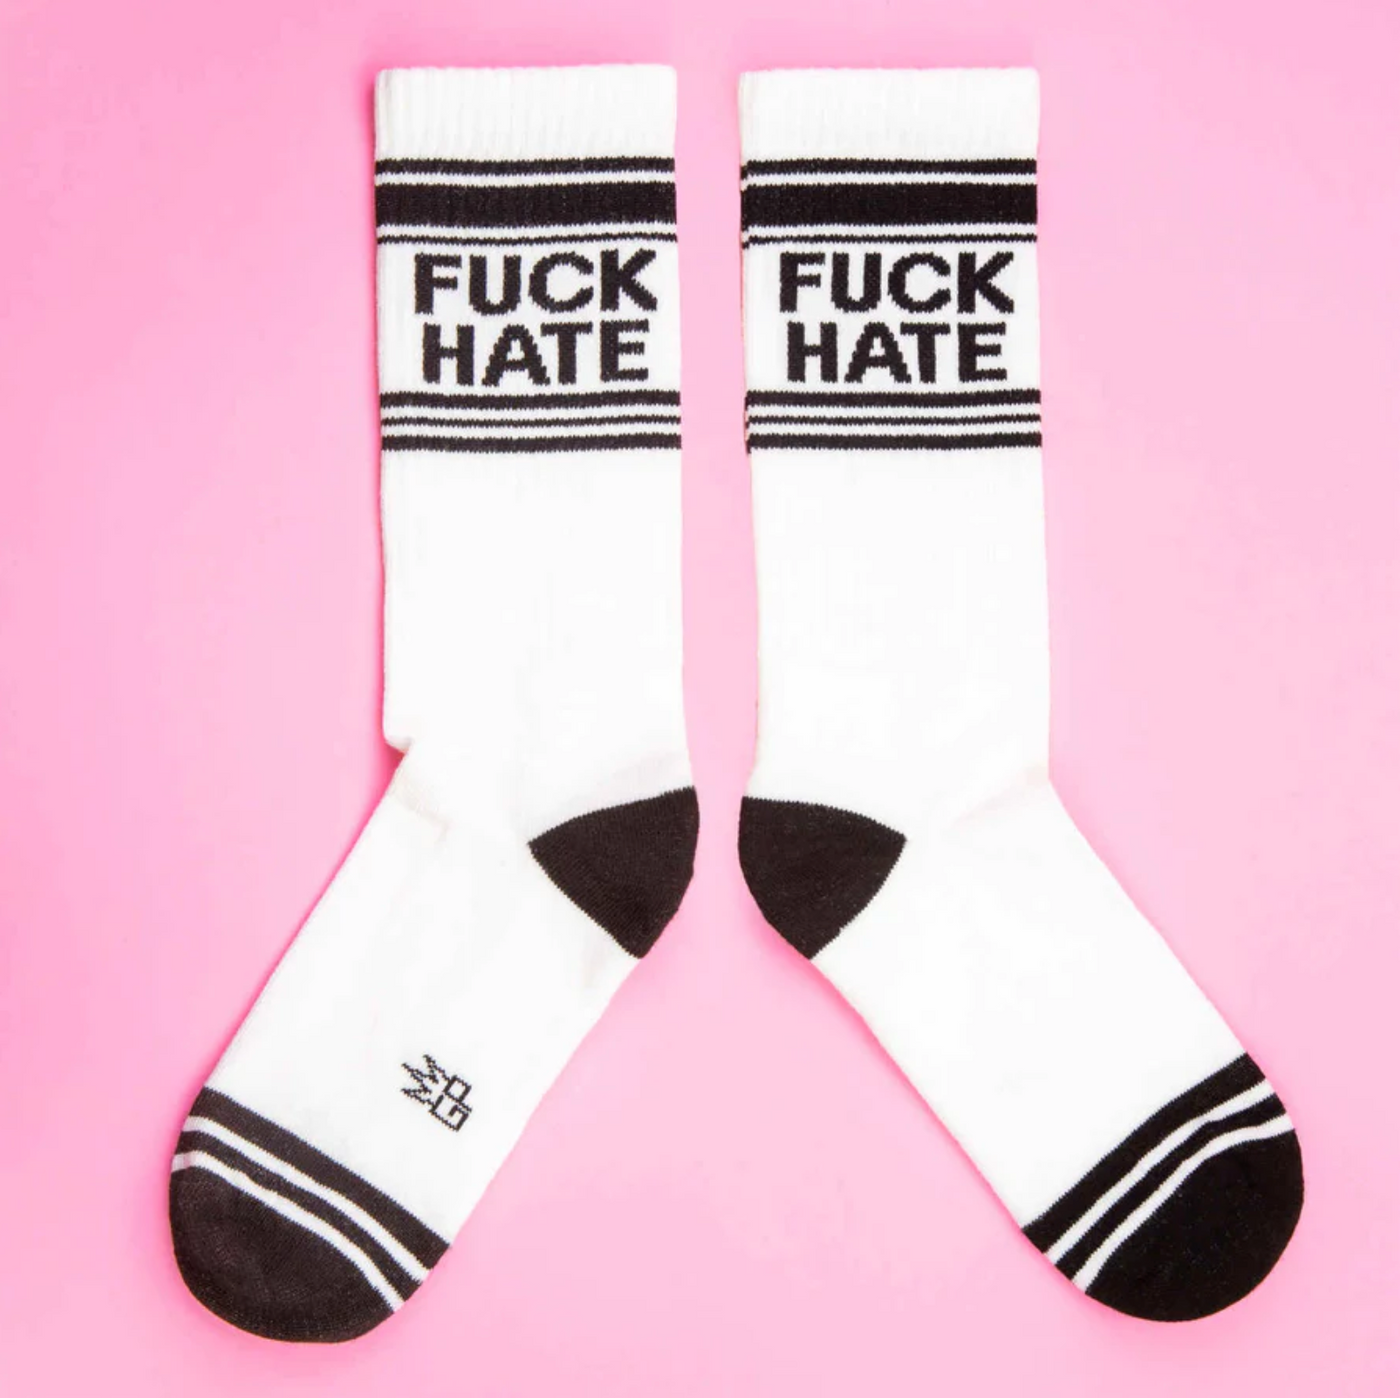 FUCK HATE gym socks